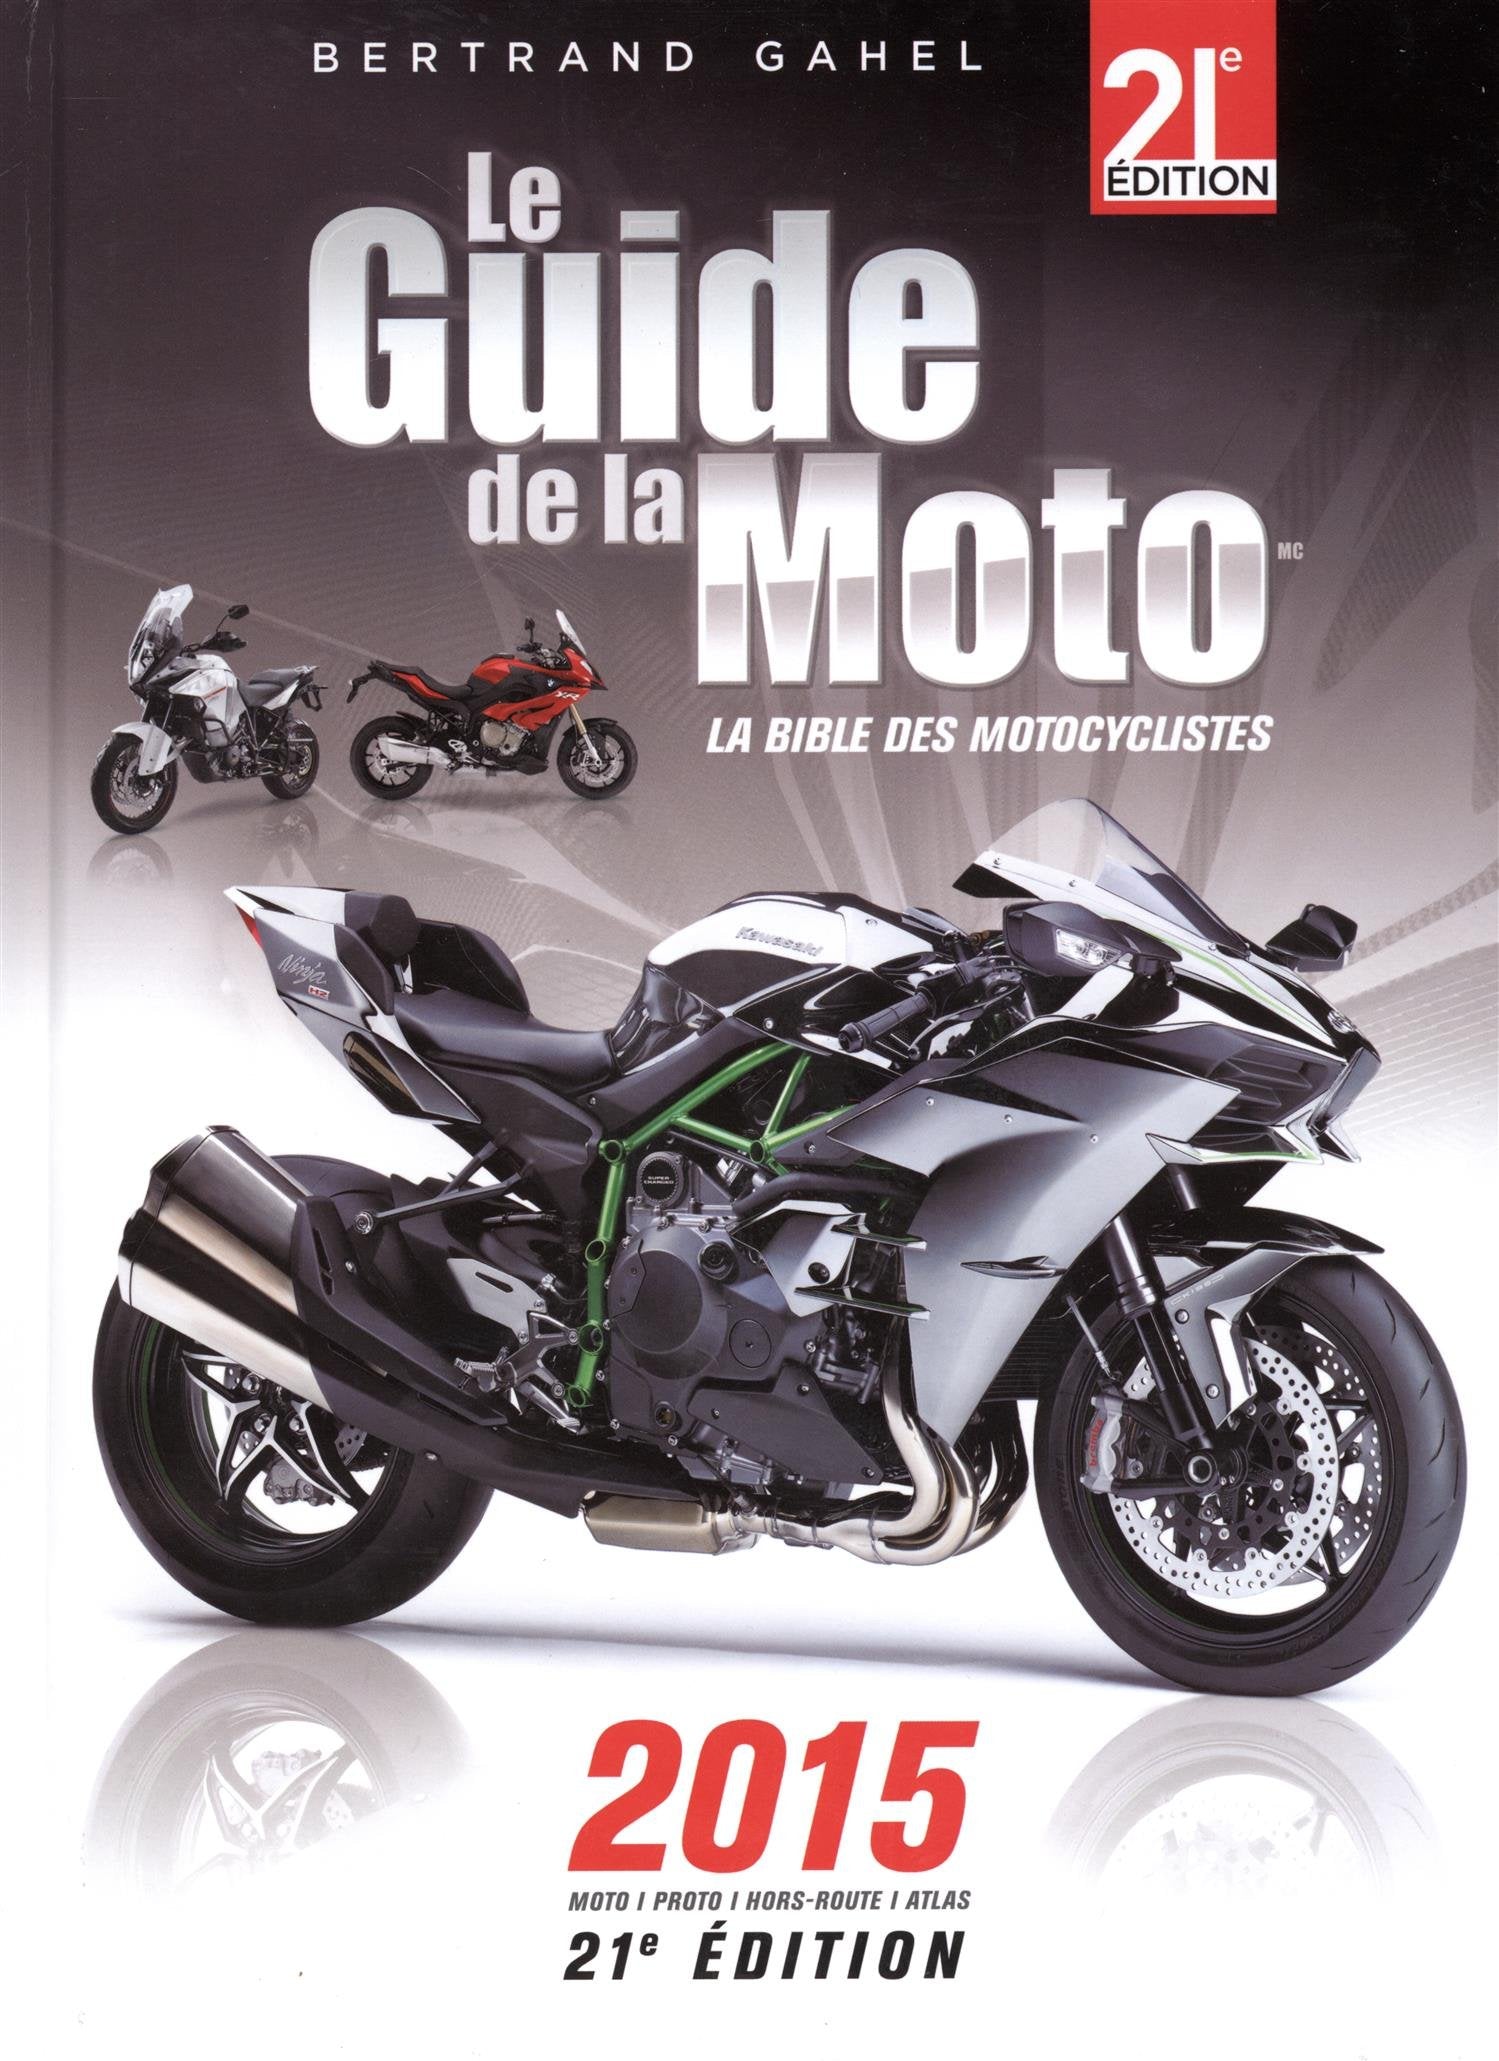 Le guide de la moto 2015 - Bertrand Gahel